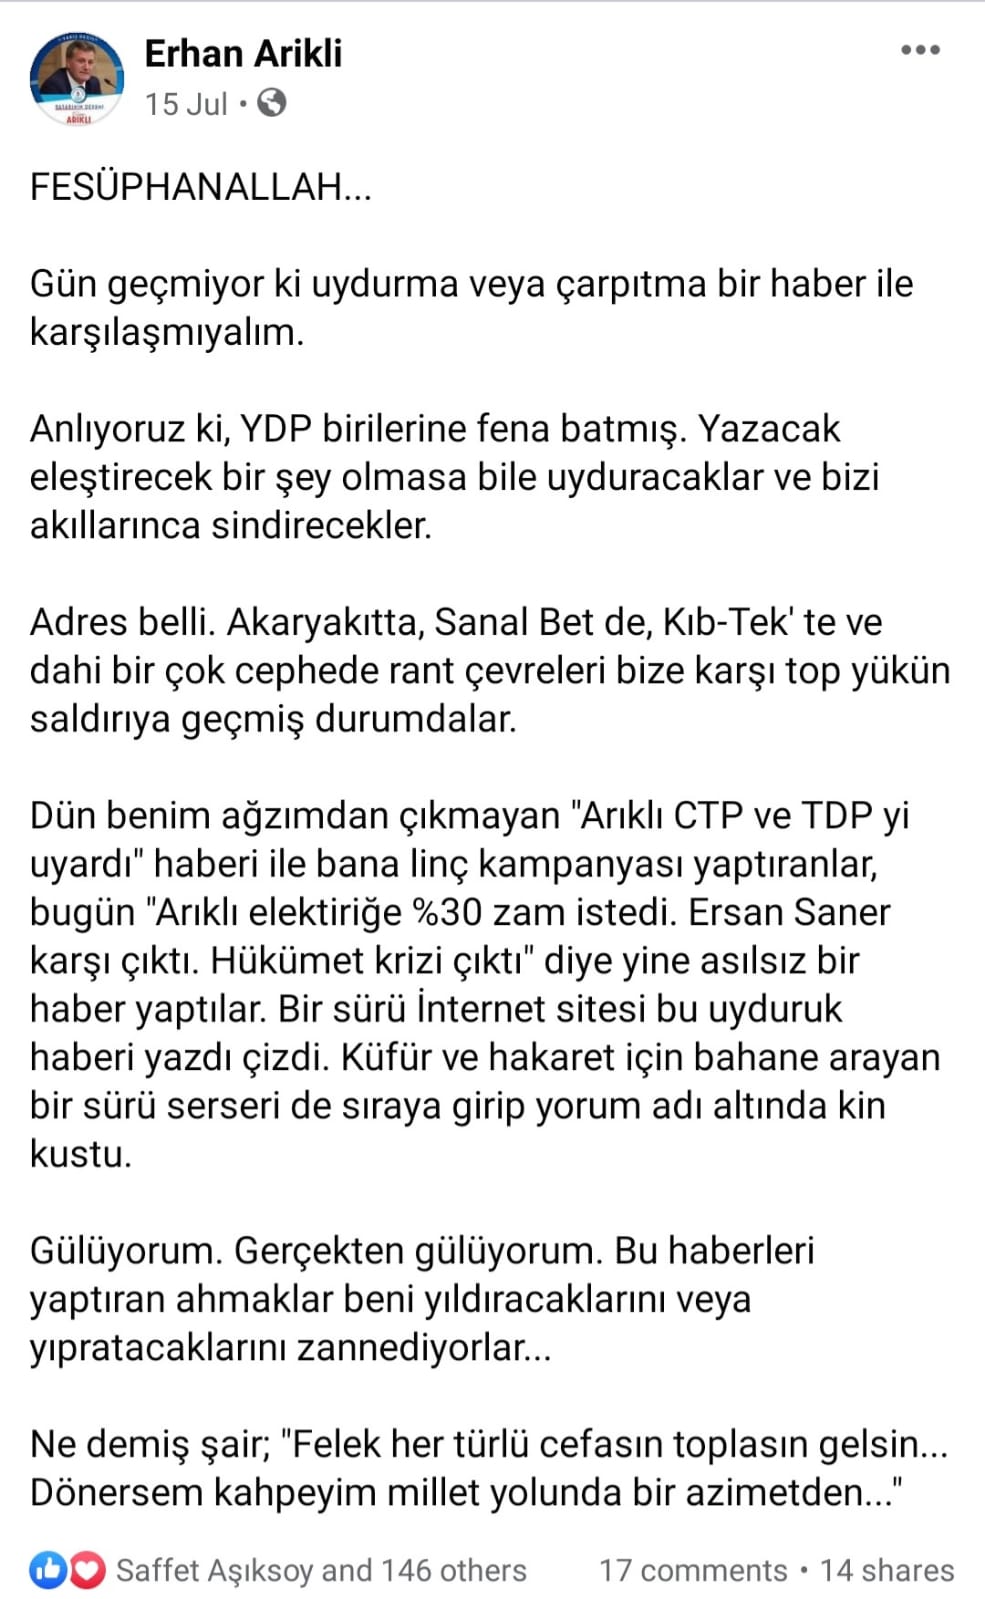 ozgur_gazete_kibris_arikli_kib_tek_zam